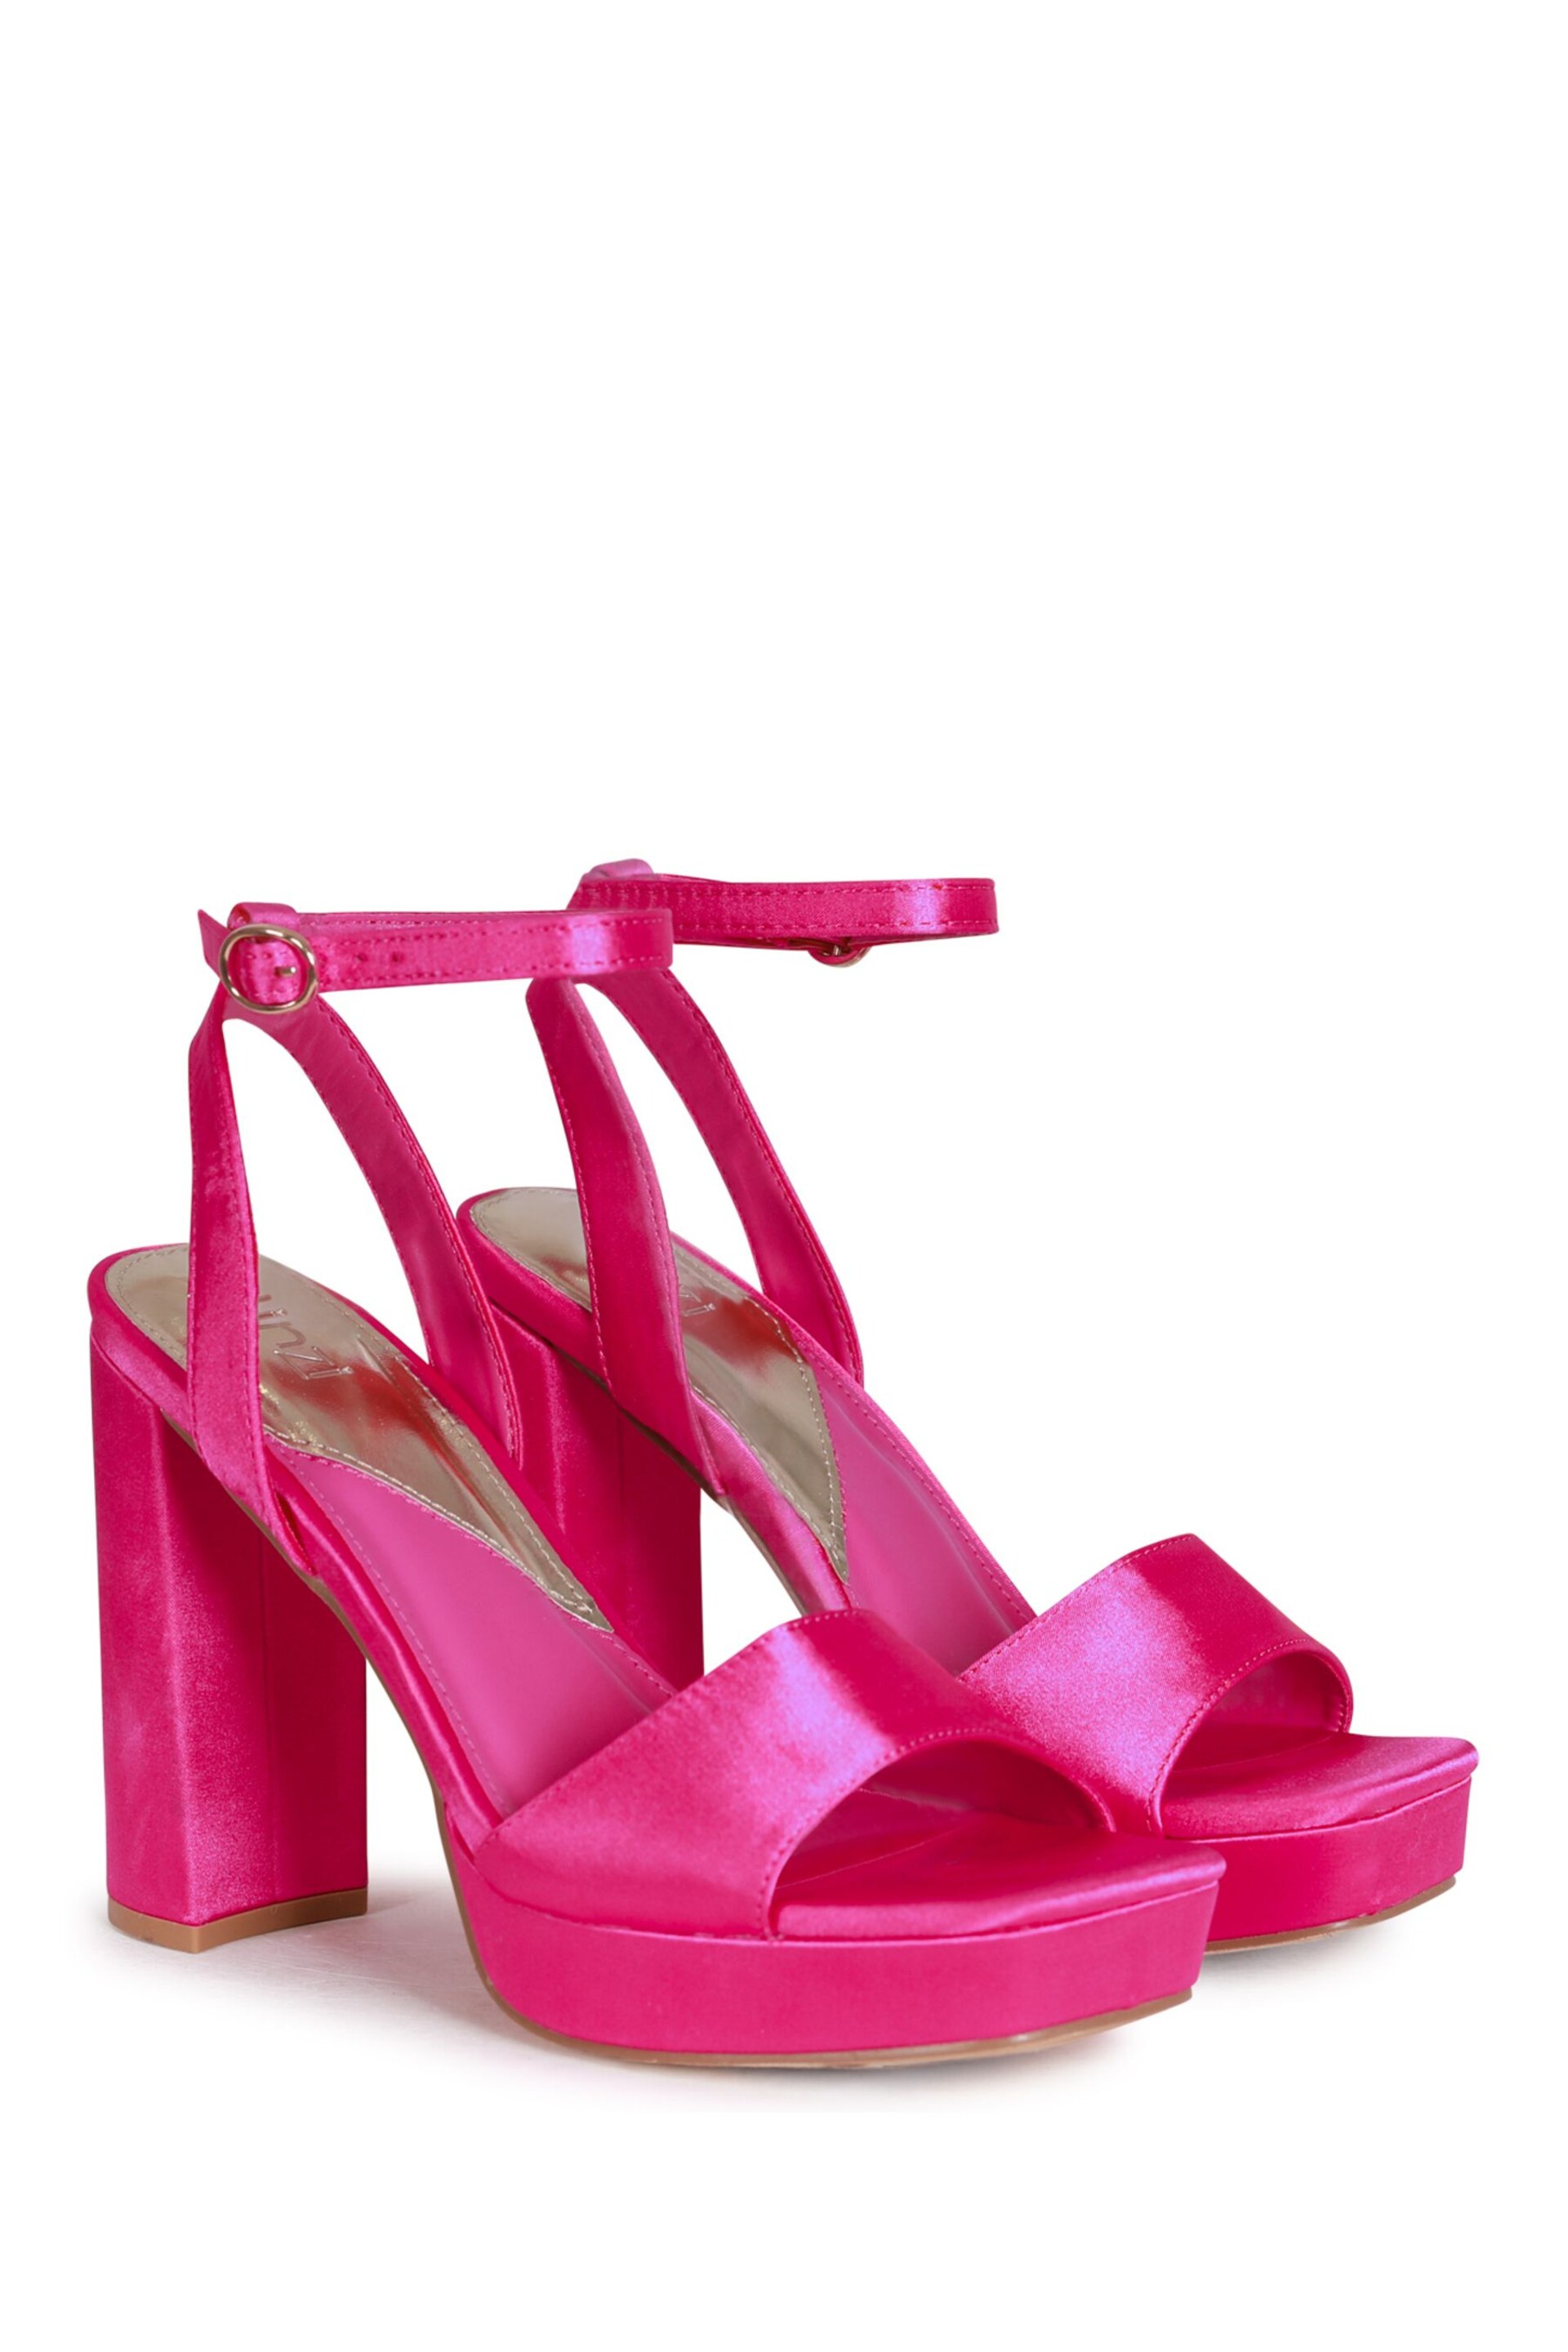 Linzi Pink Fuchsia Satin Gloria Platform Heeled Sandal With Wrap Around Ankle Strap - Image 3 of 4